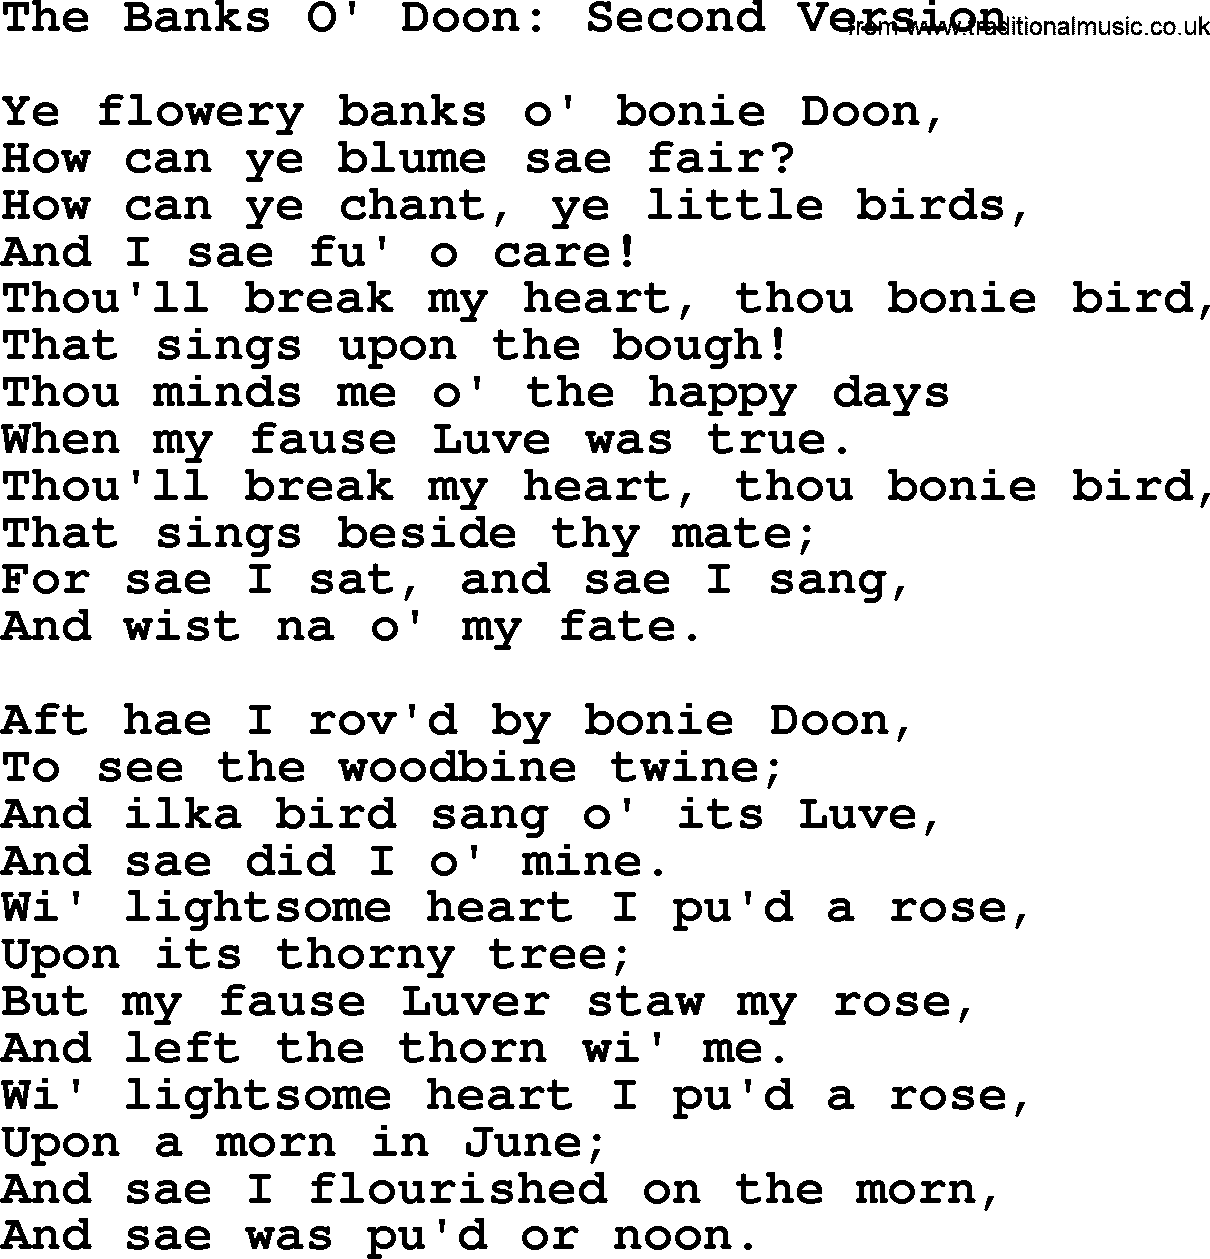 Robert Burns Songs & Lyrics: The Banks O' Doon Second Version